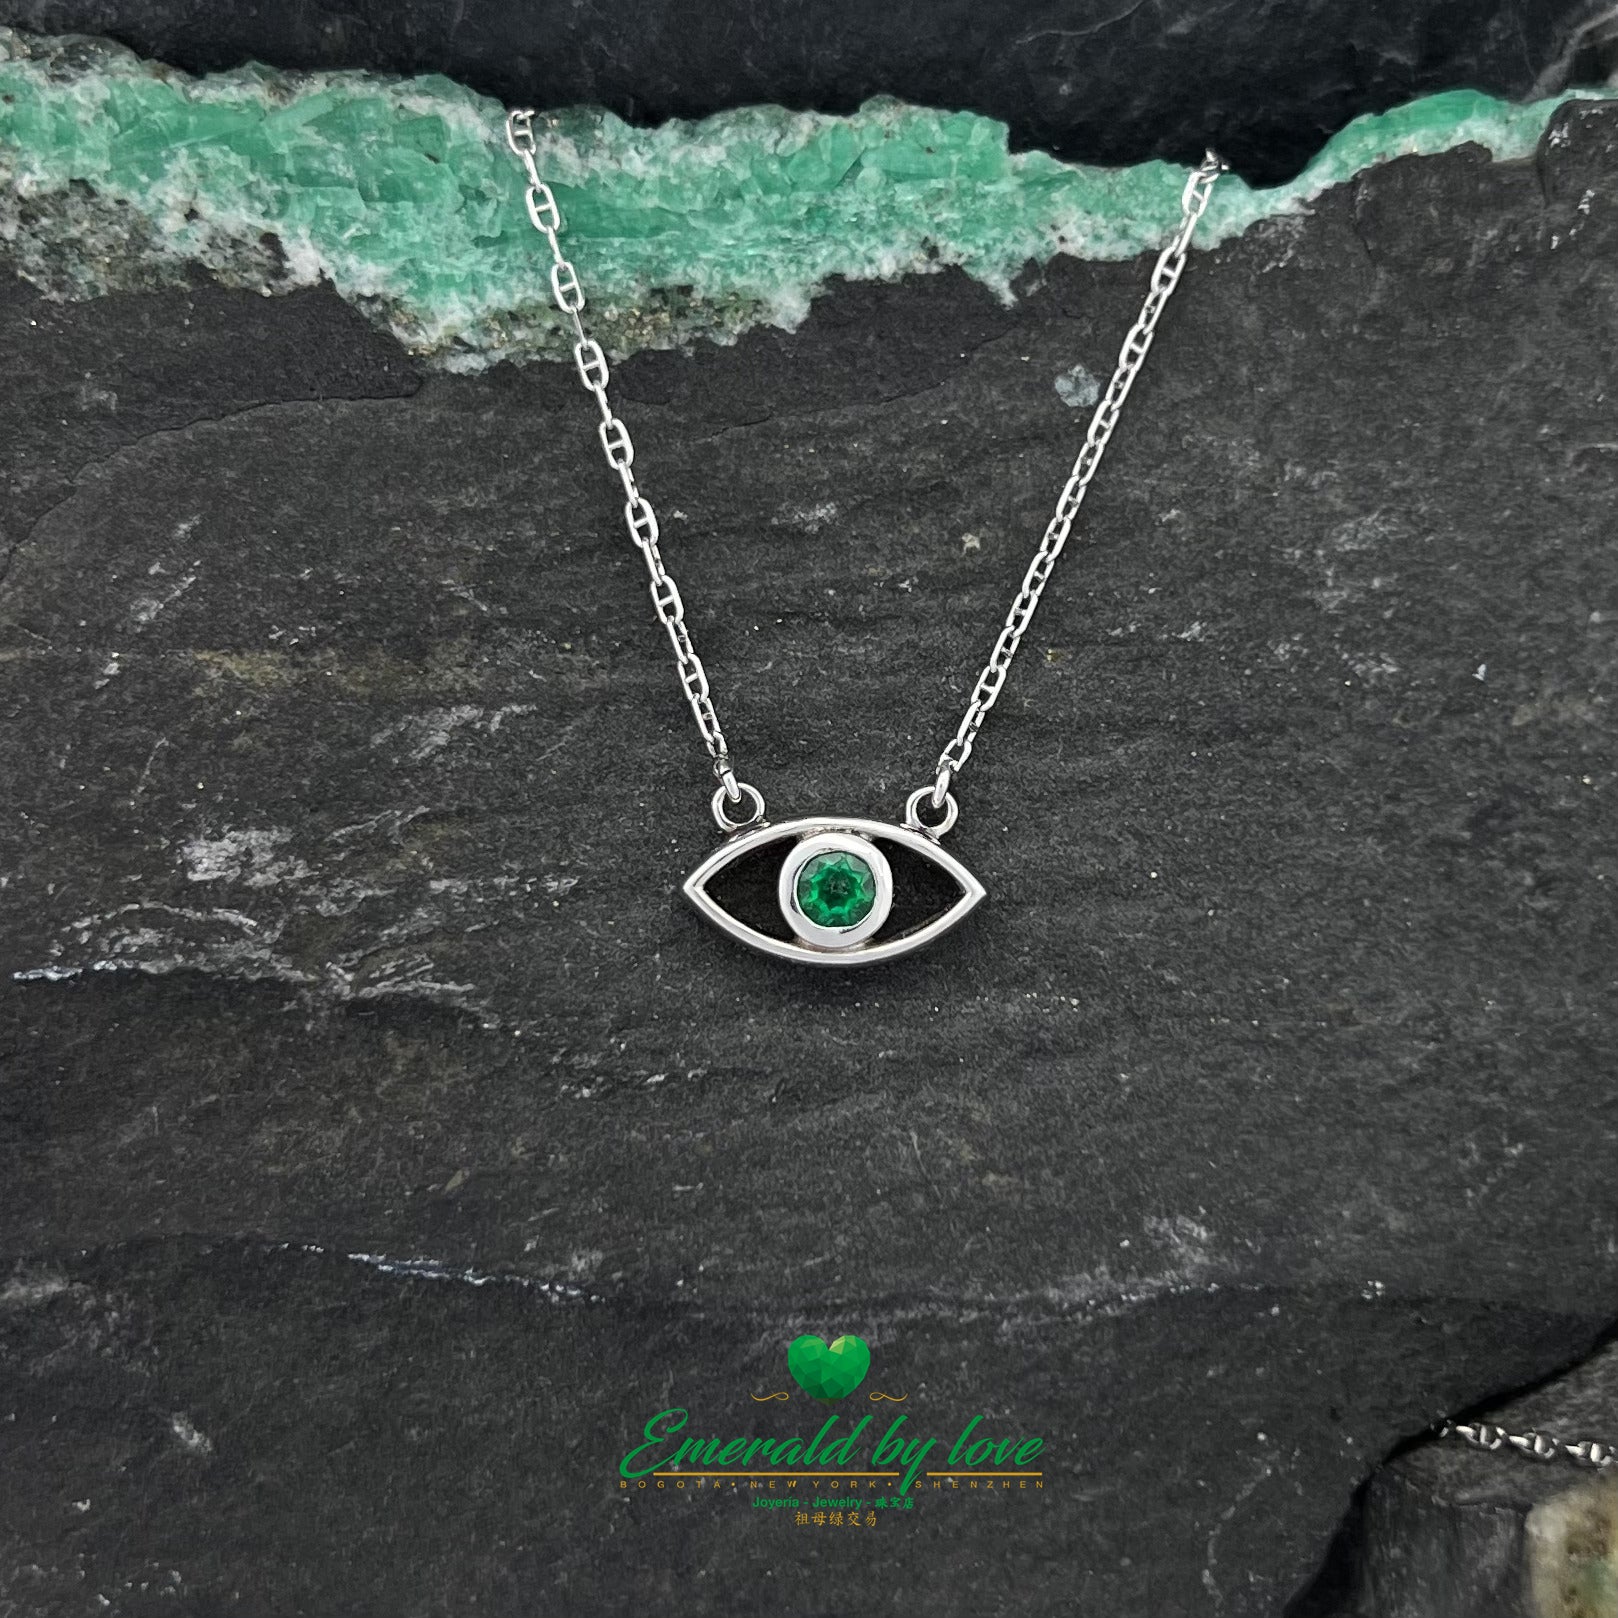 Ethereal Gaze: White Gold Eye Pendant with Round Emerald Center